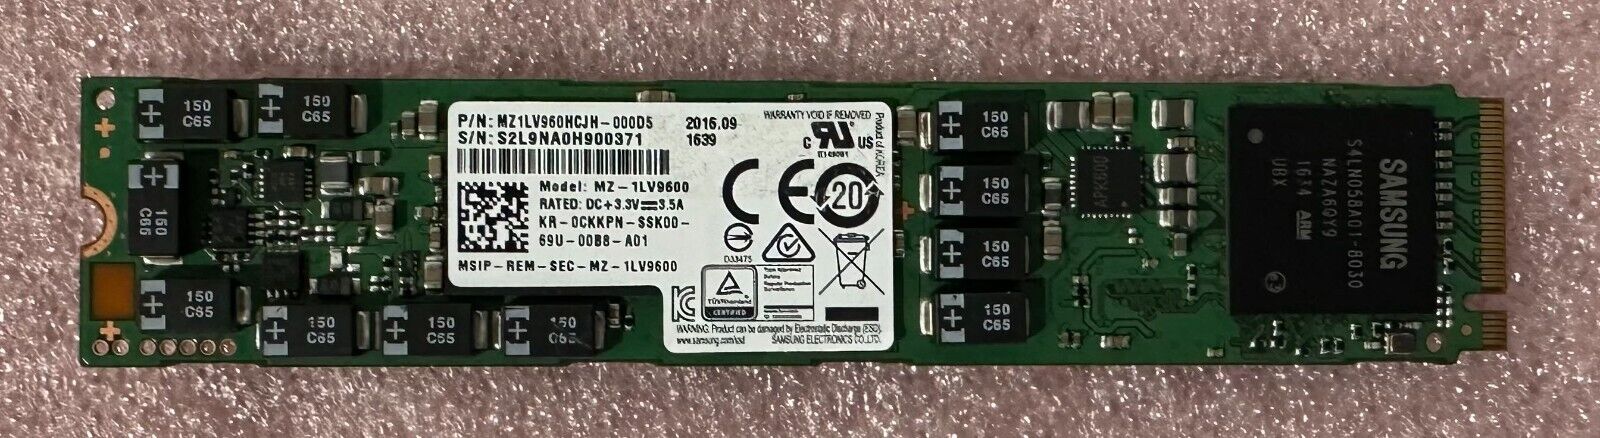 Samsung 960GB 110mm PCIe 3.0 x4 SSD MZ1LV960HCJH MZ-1LV9600